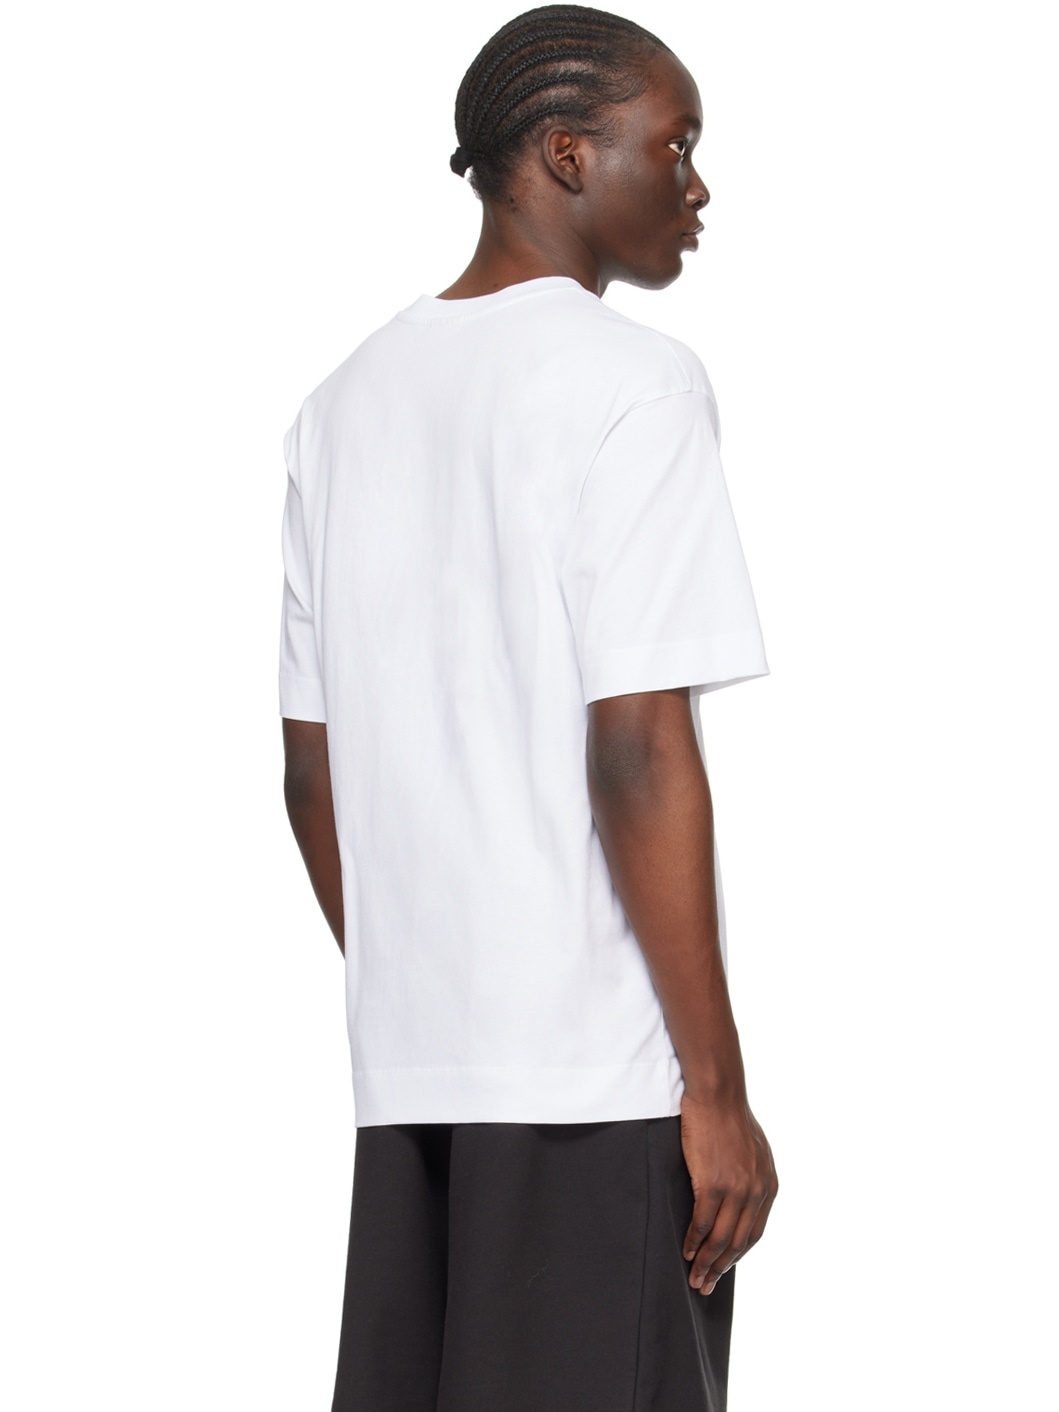 White Crewneck T-Shirt - 3